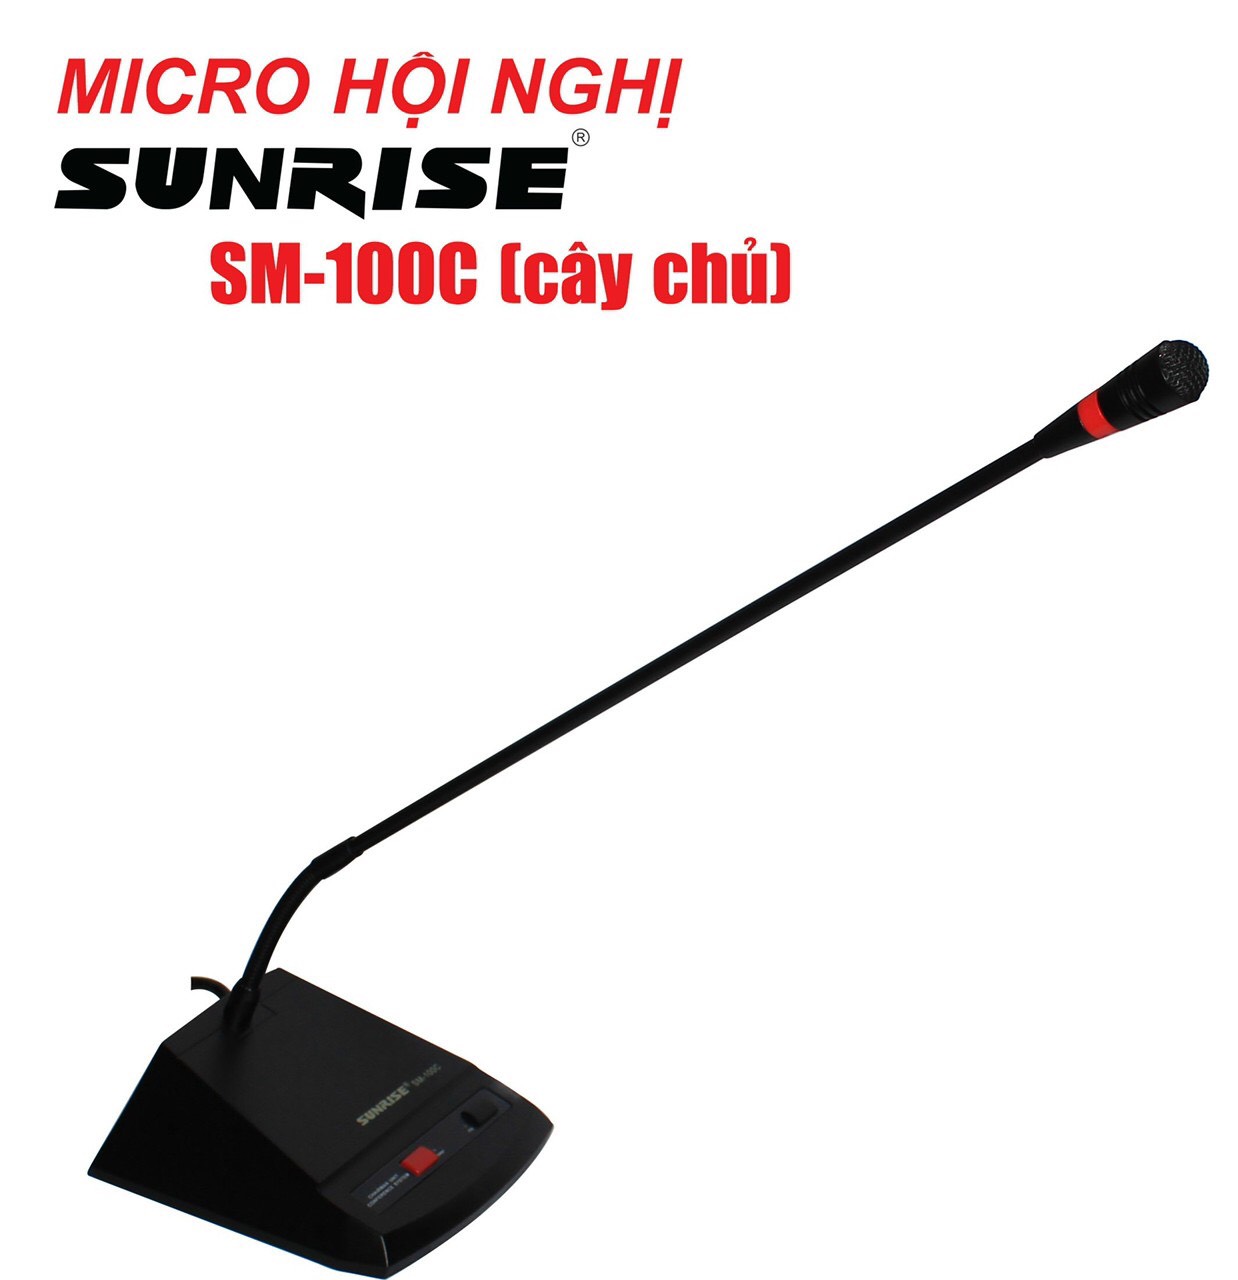 Micro hội nghị Sunrise SM-100C (Micro chủ)